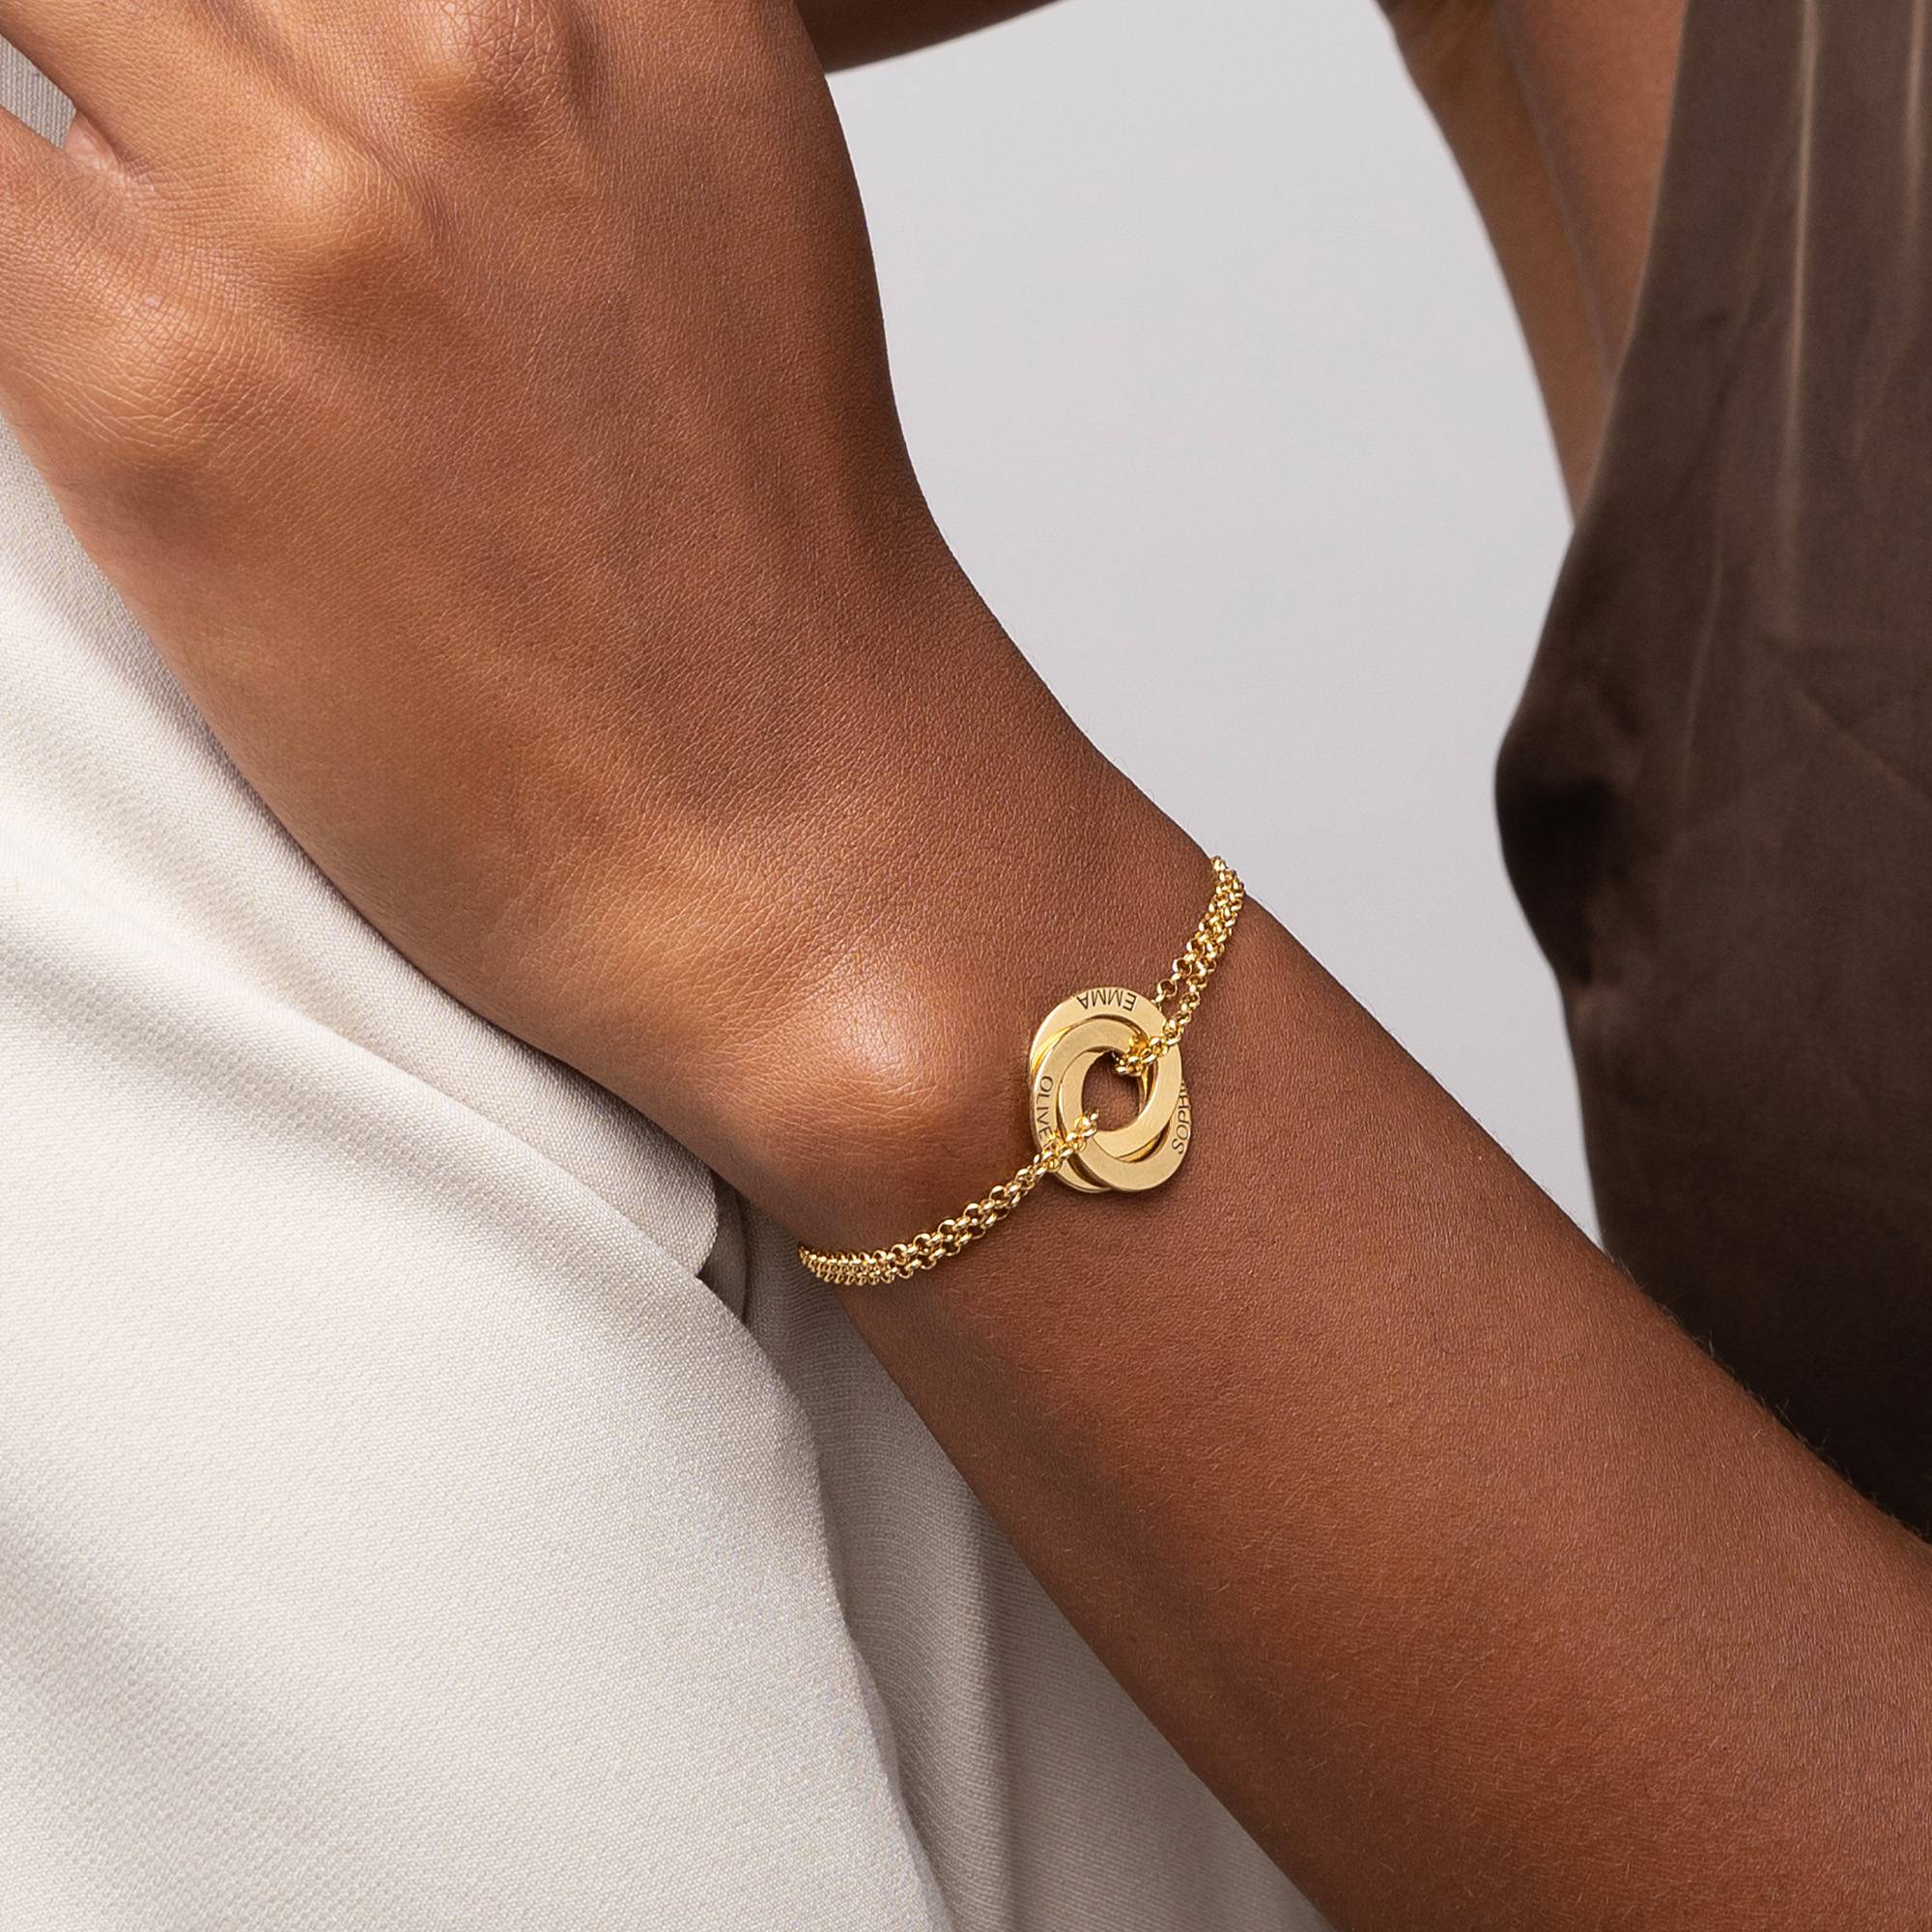 Lucy Russische Ring-Armband - 750er Gold-Vermeil-3 Produktfoto